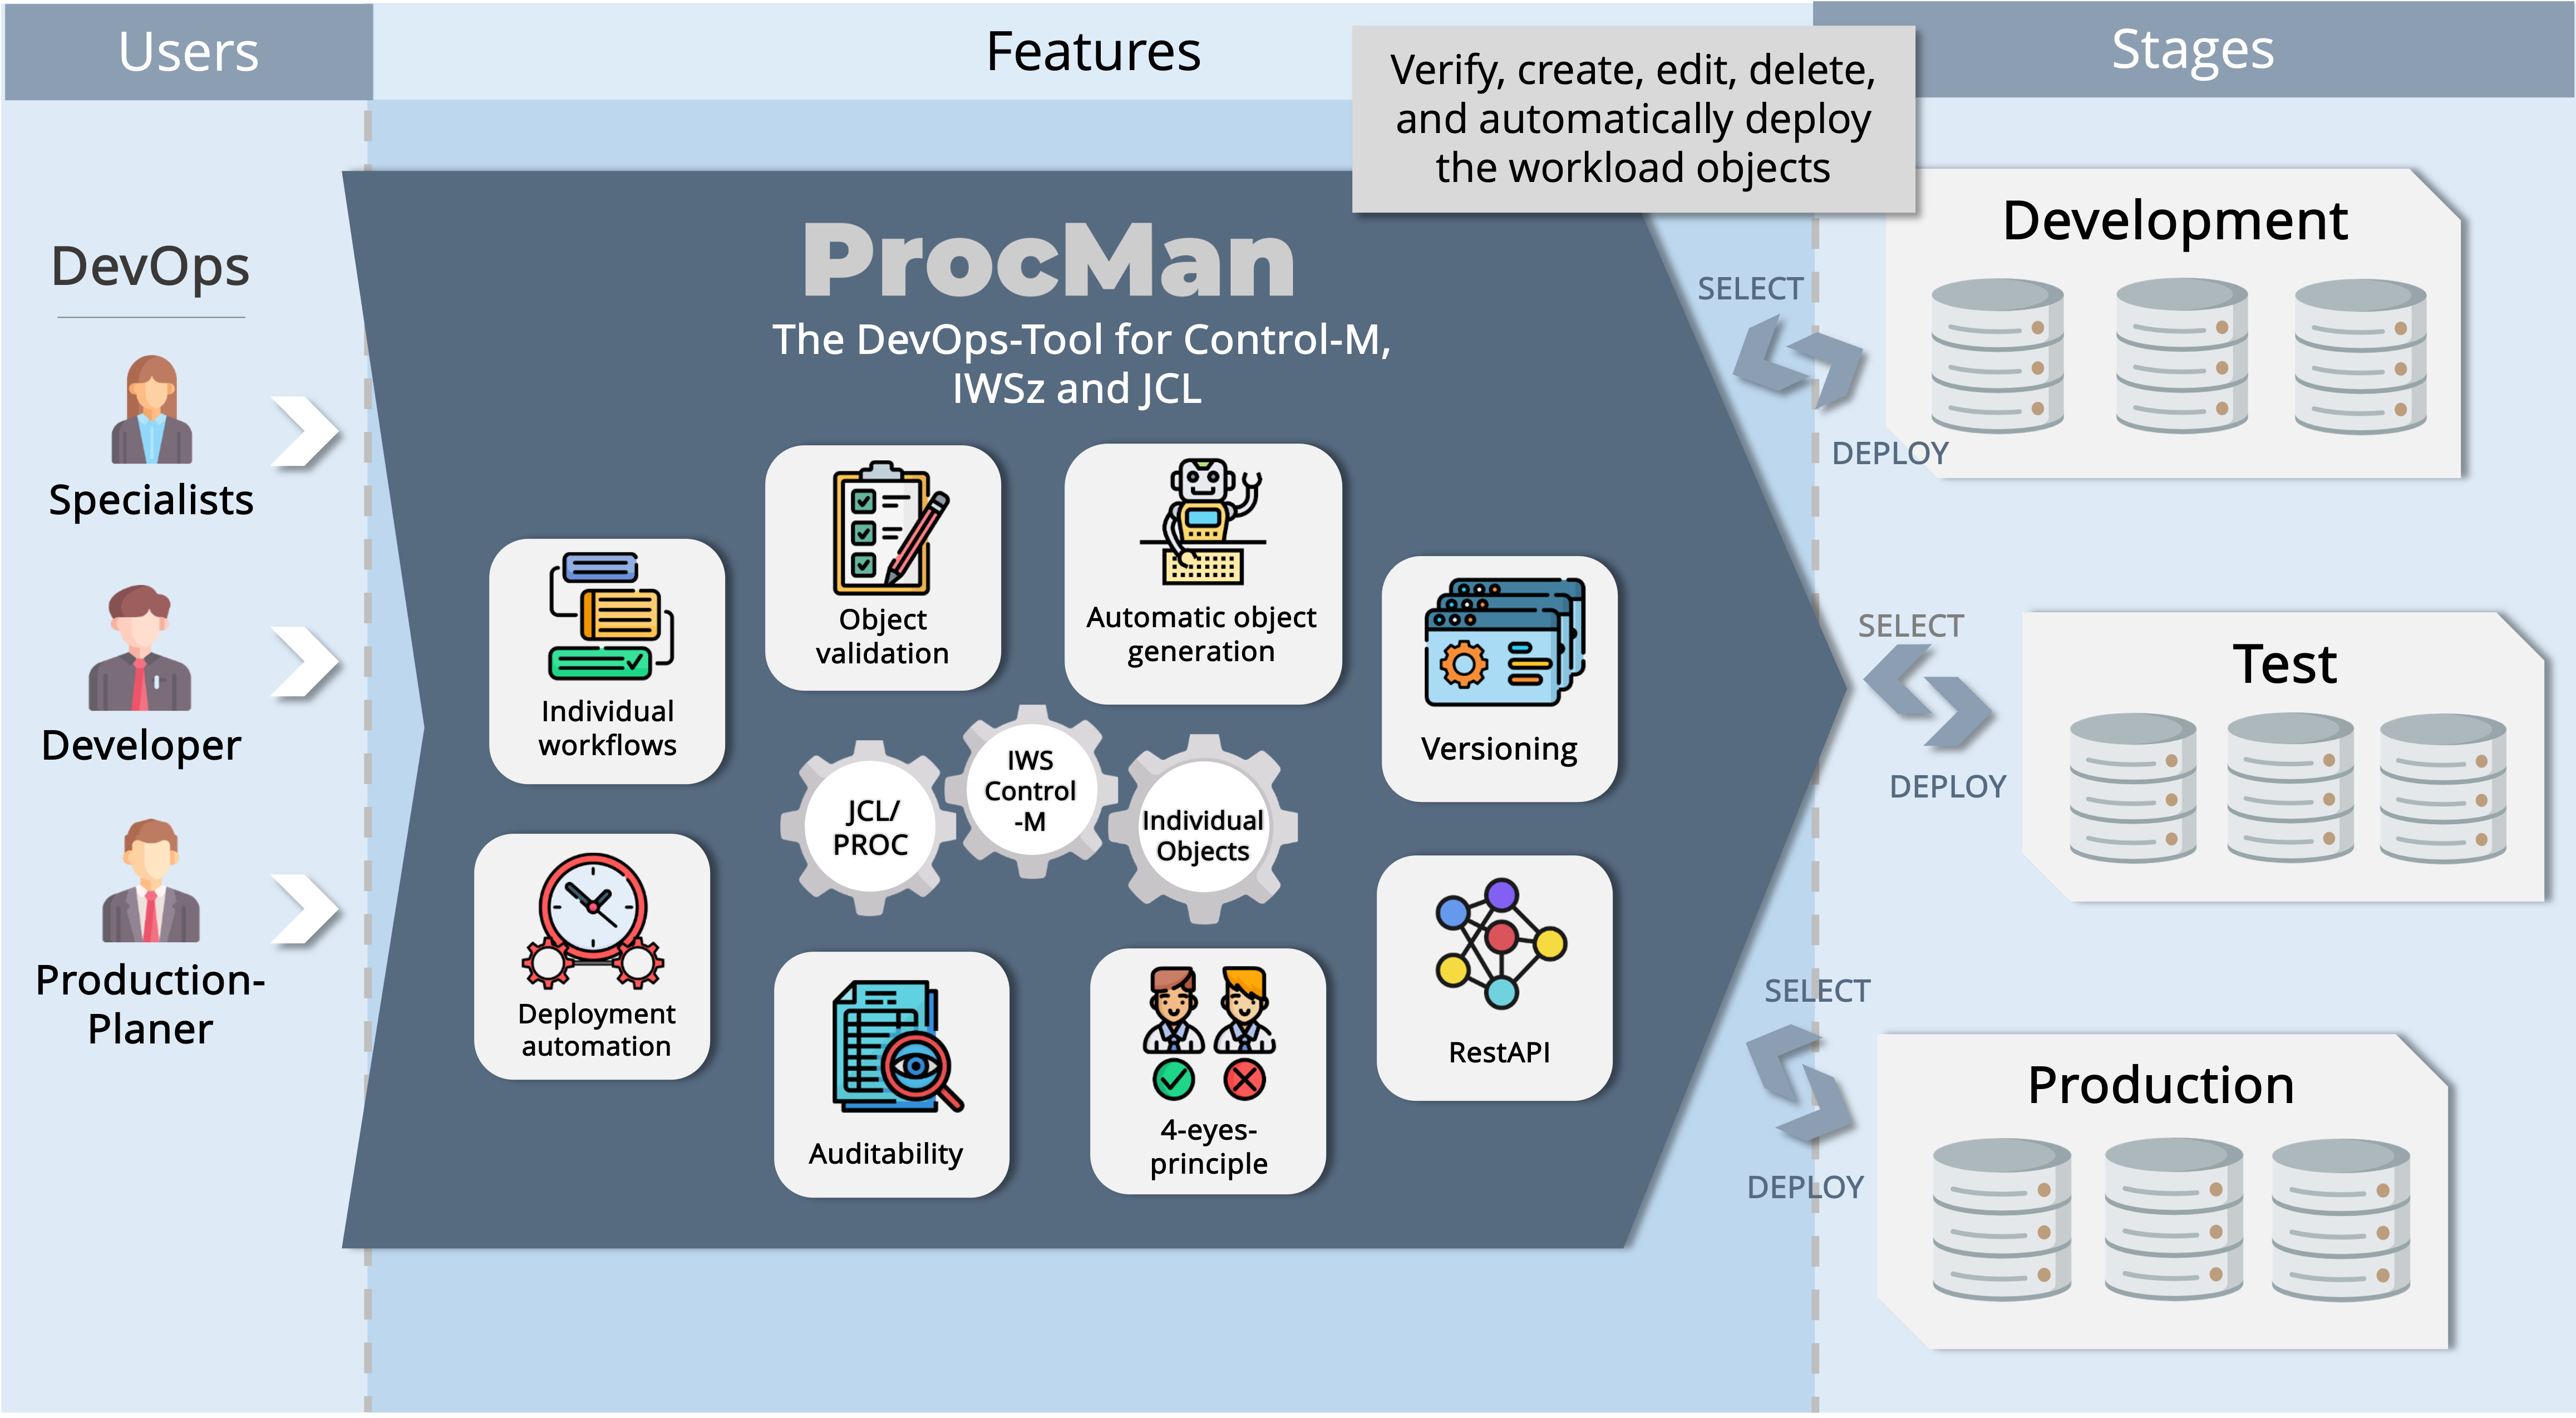 Who uses Procman?